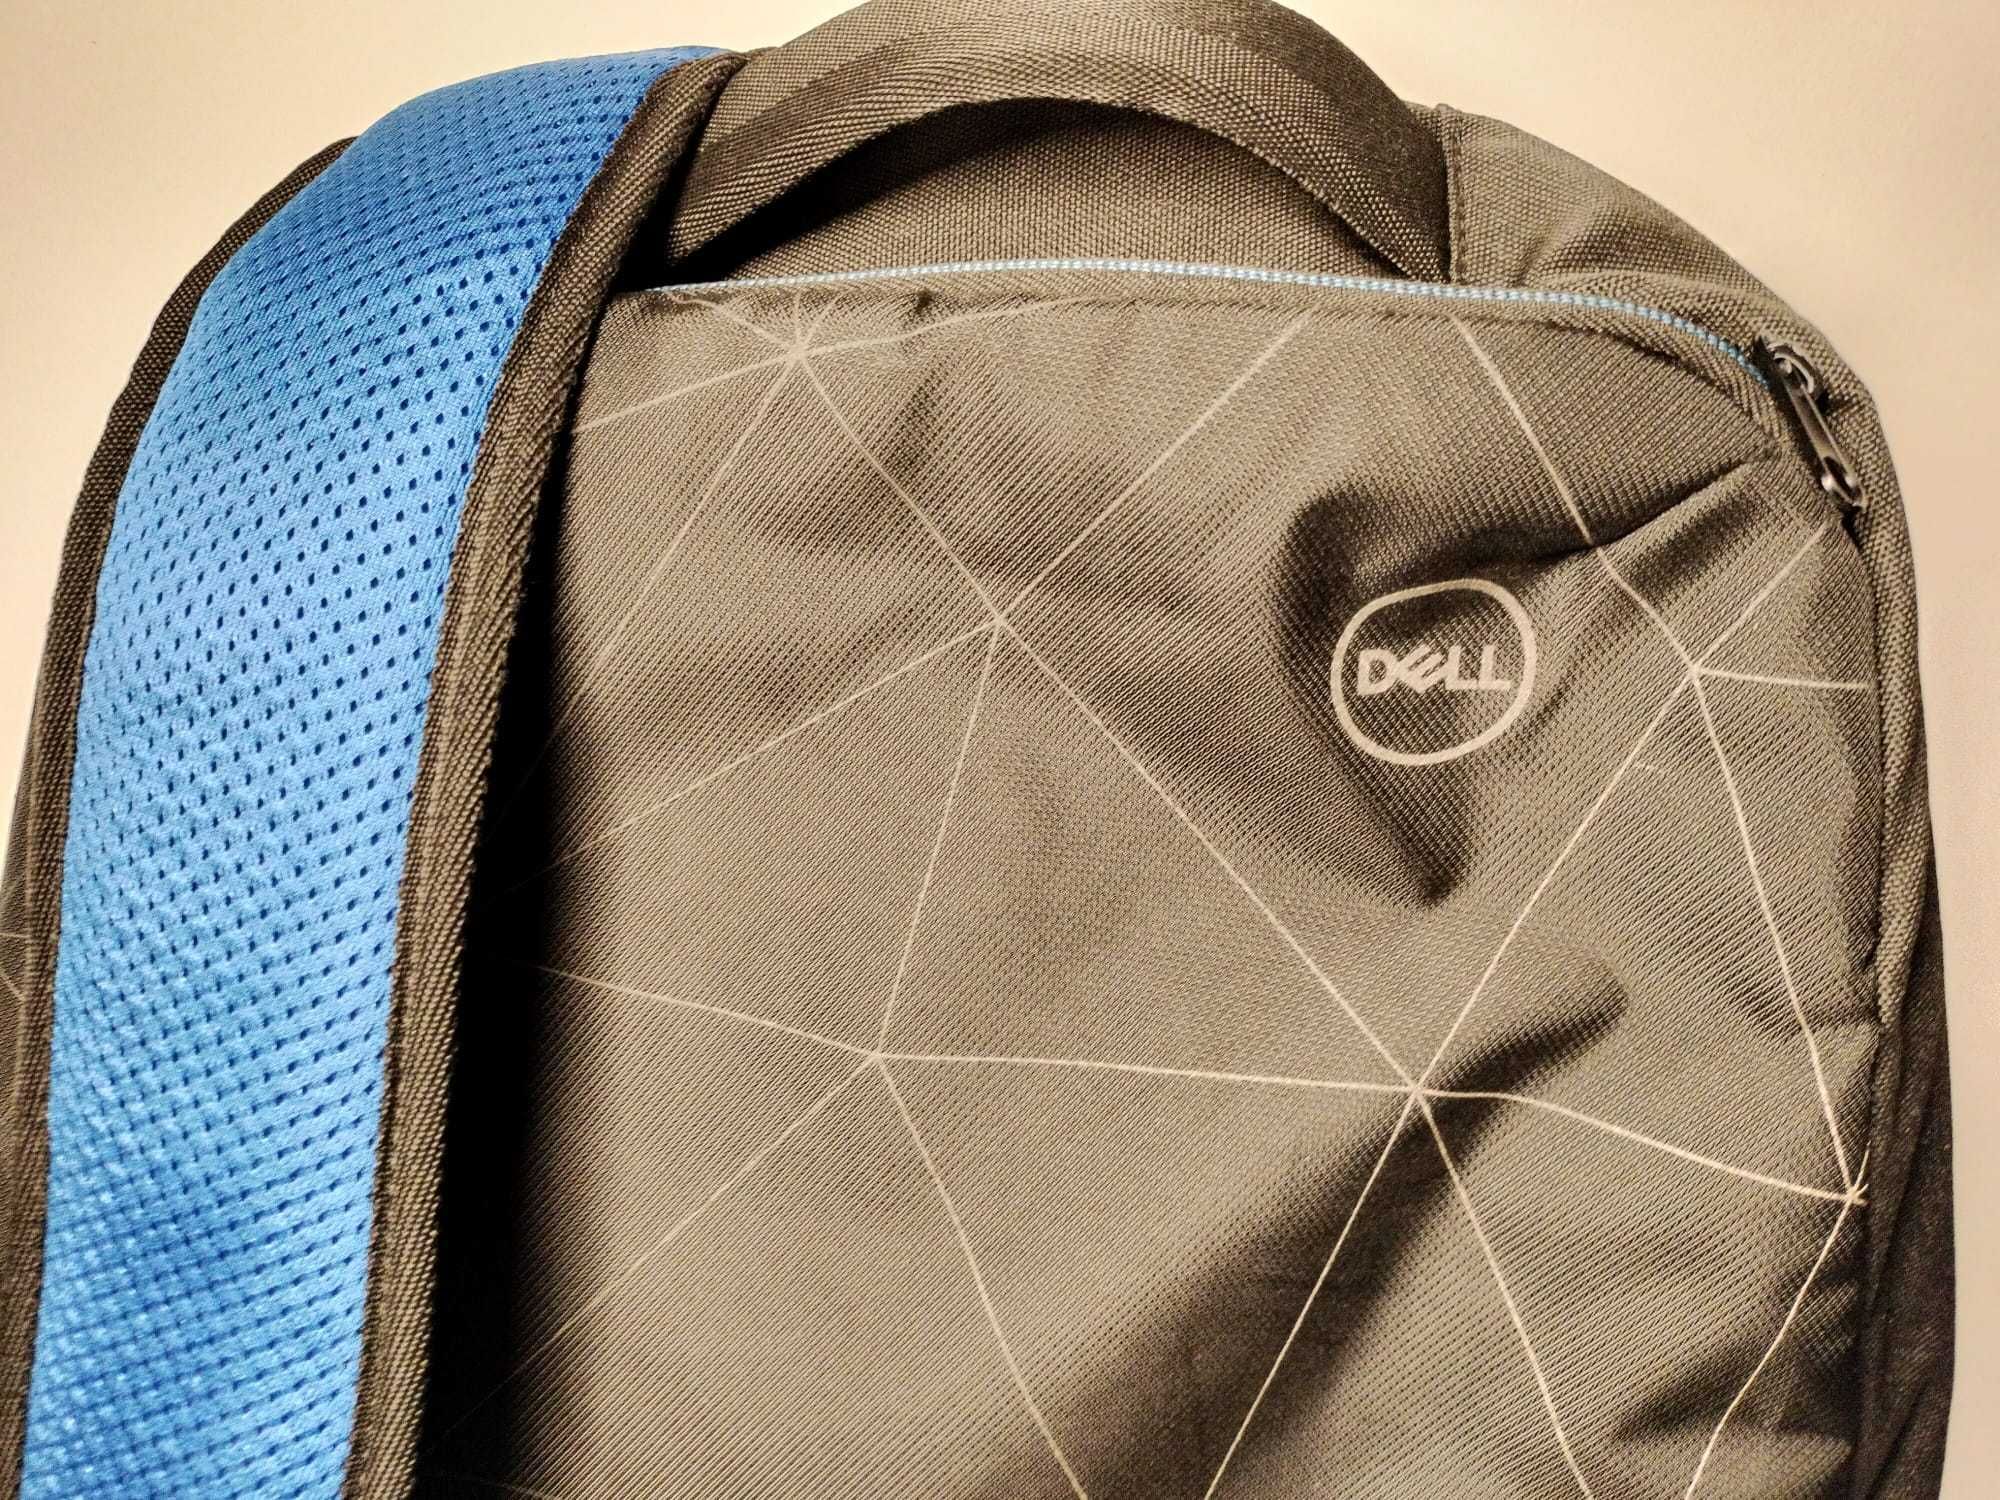 Proteja Computador Dell com Grande Estilo: Mochila de Alta Segurança